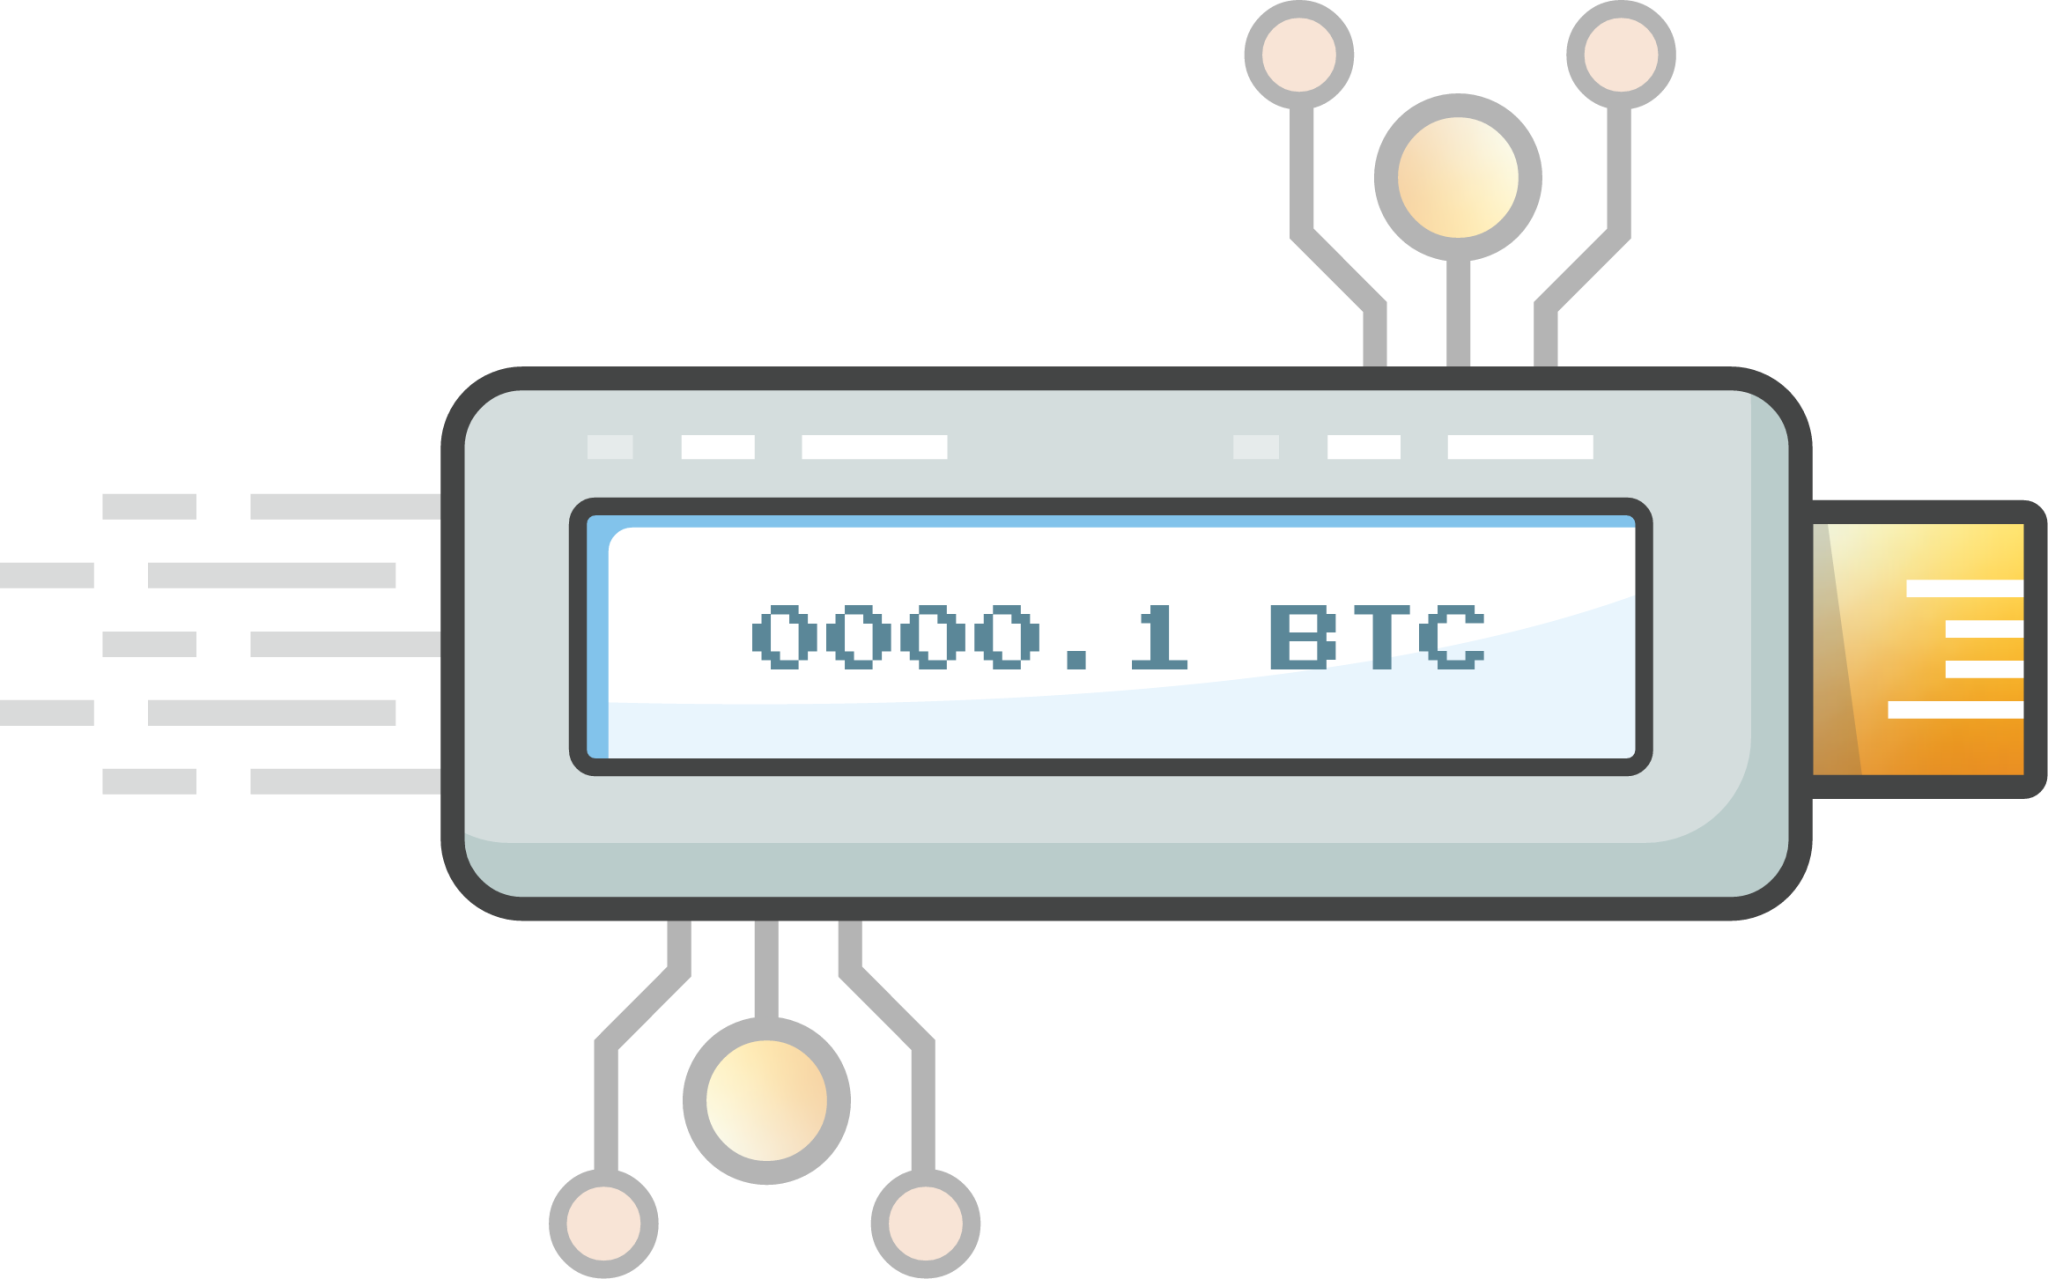 bitcoin usb stick illustration